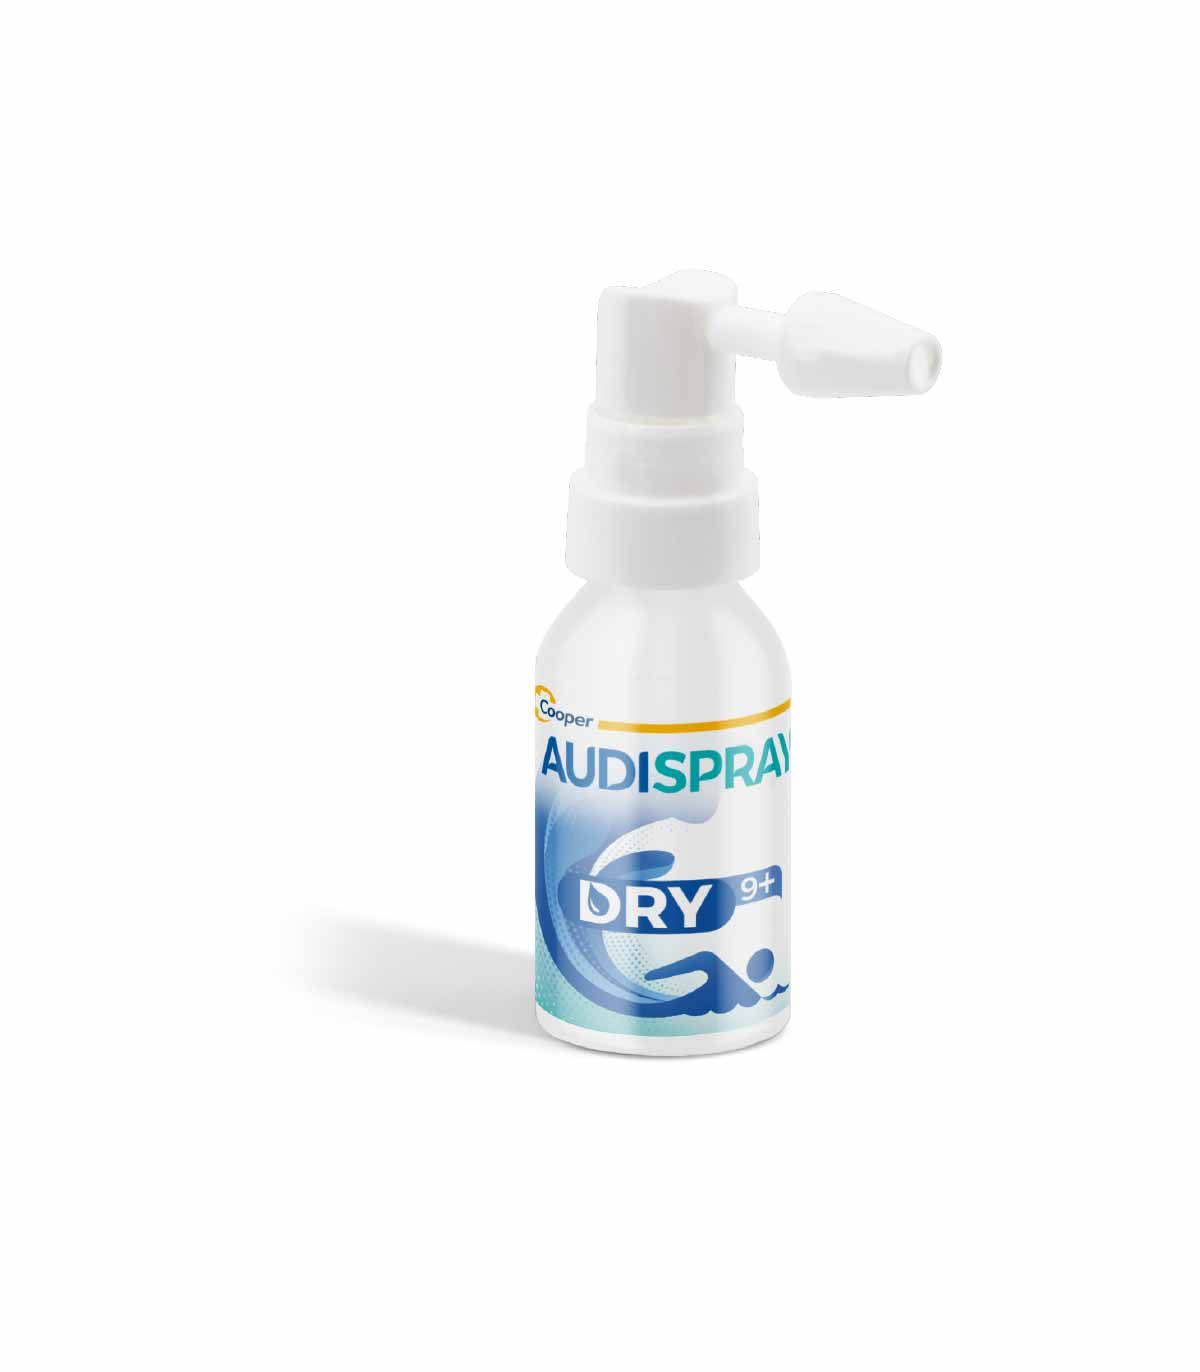 980292647 - Audispray Dry Spray auricolare 30ml - 4736079_4.jpg